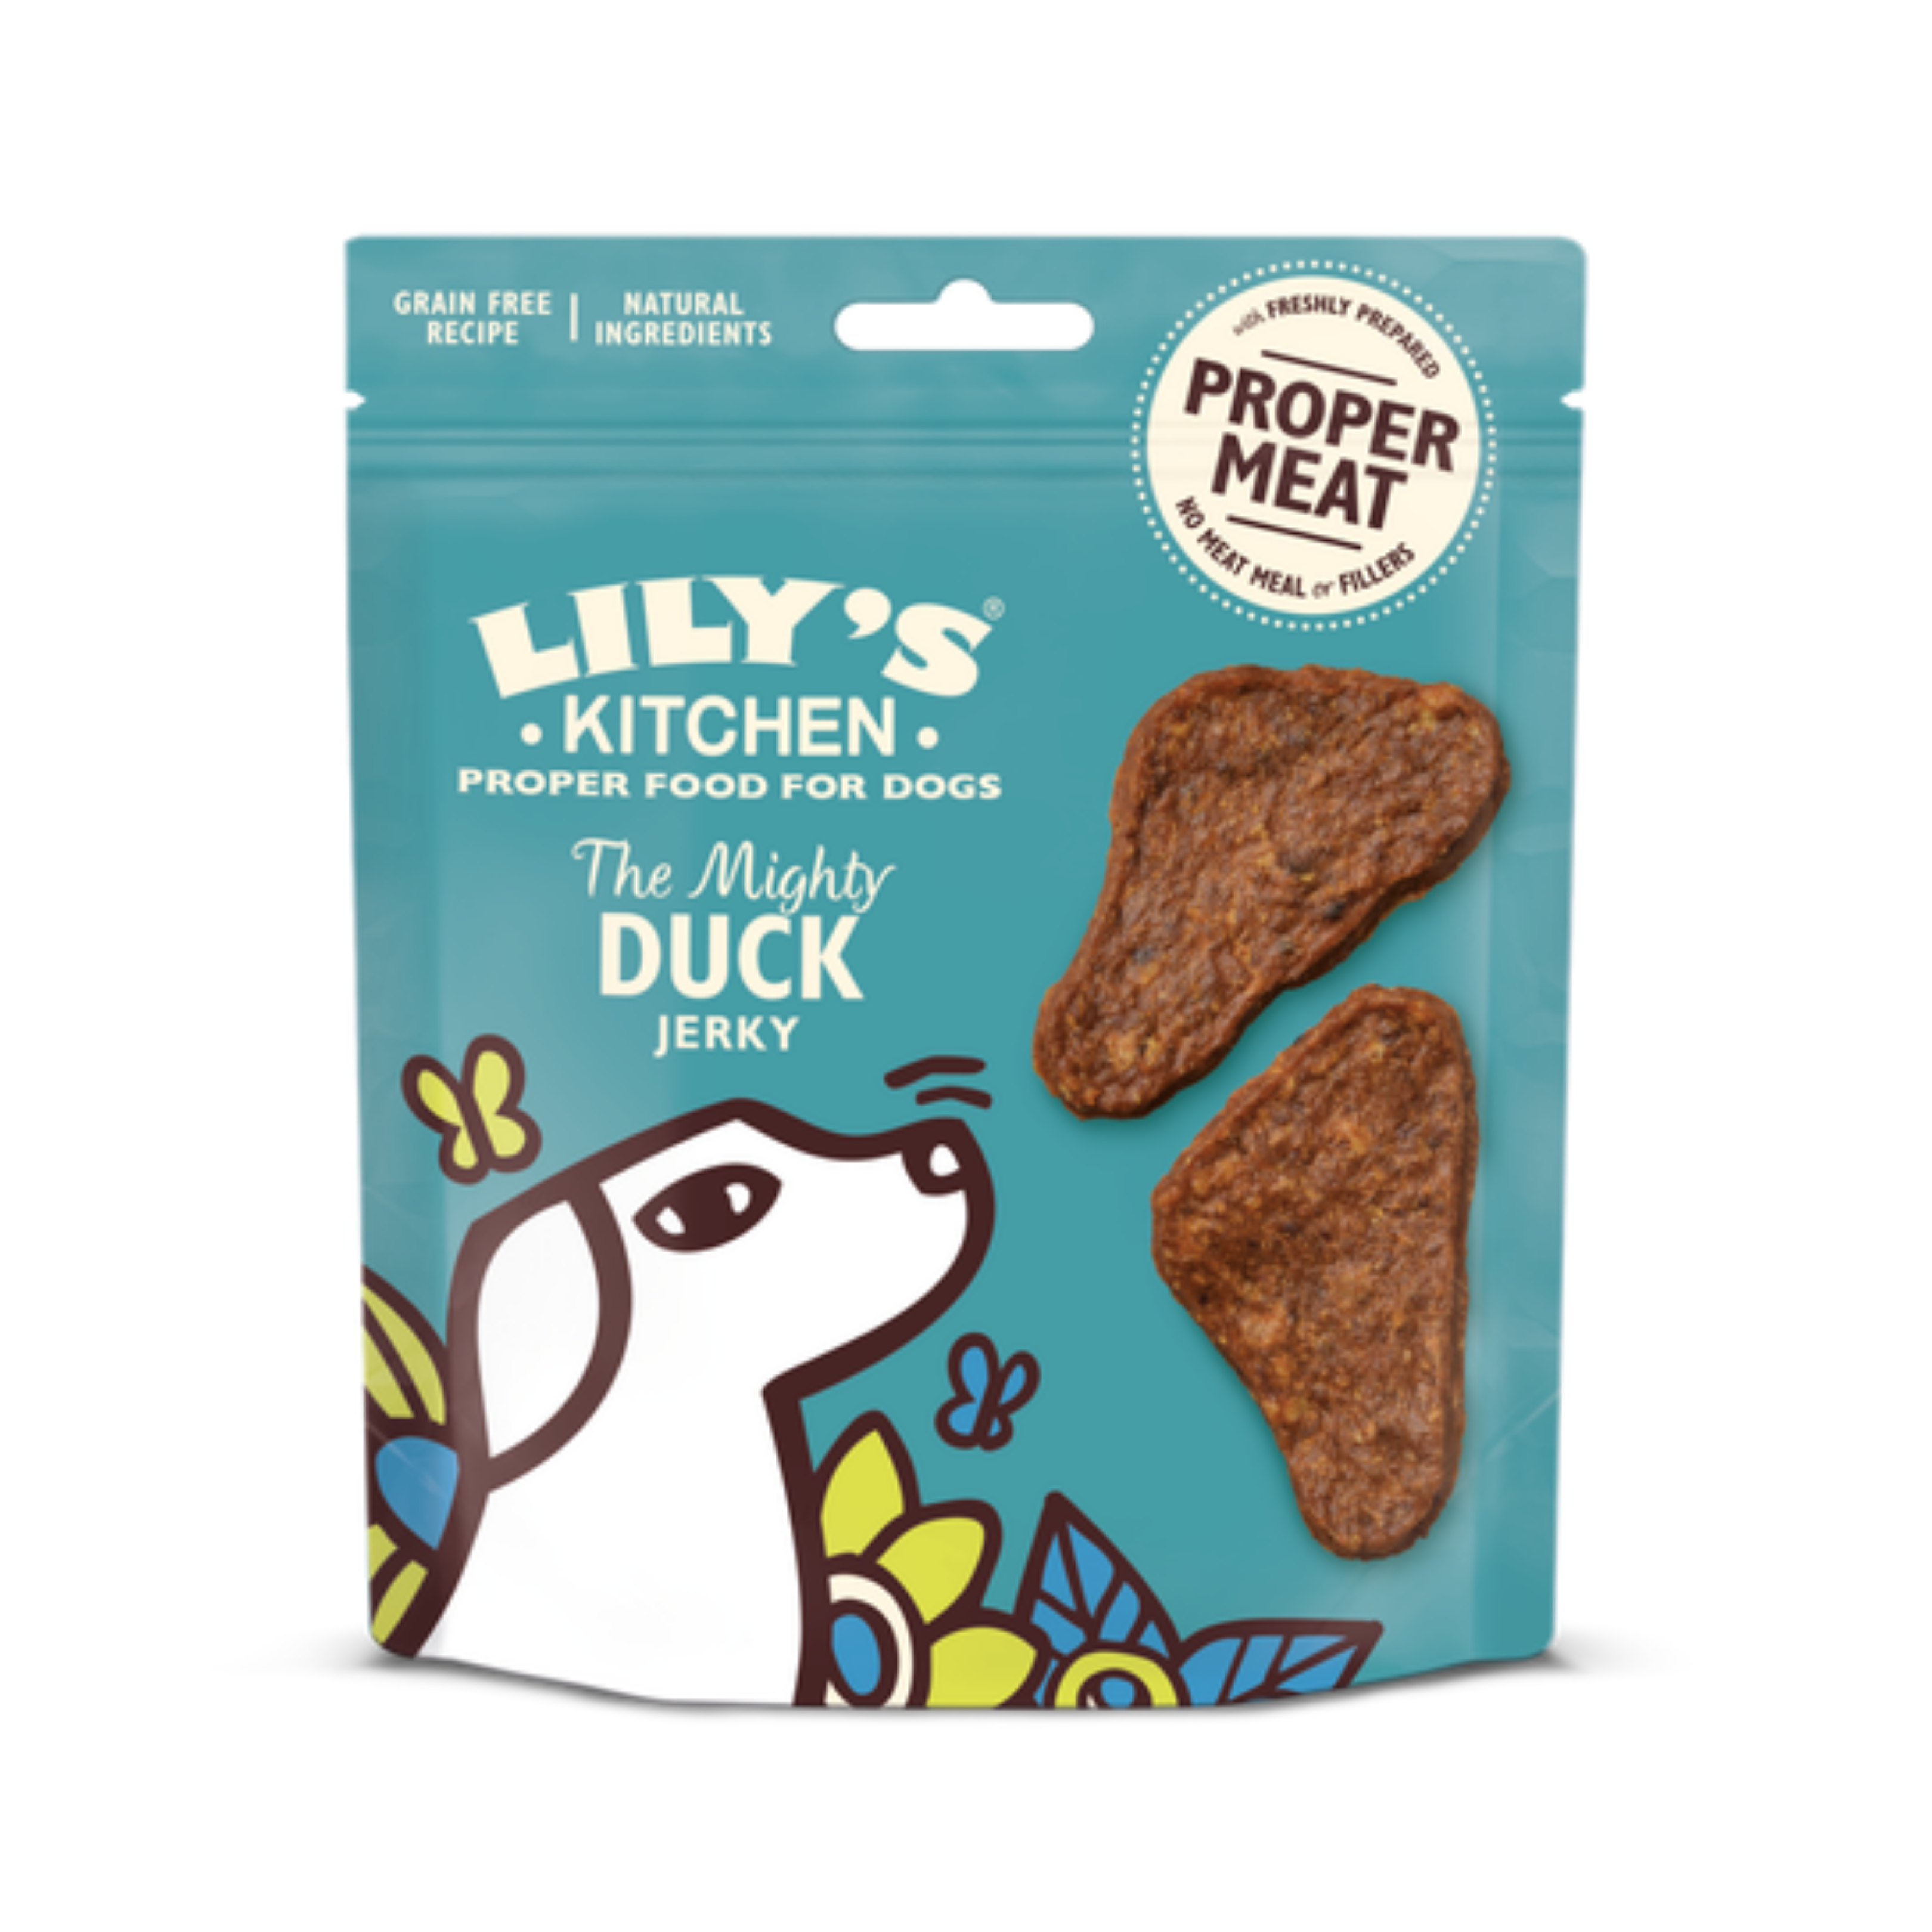 Lilys Kitchen Dog Treats狗狗零食- The Mighty Duck Mini Jerky鴨肉脆片